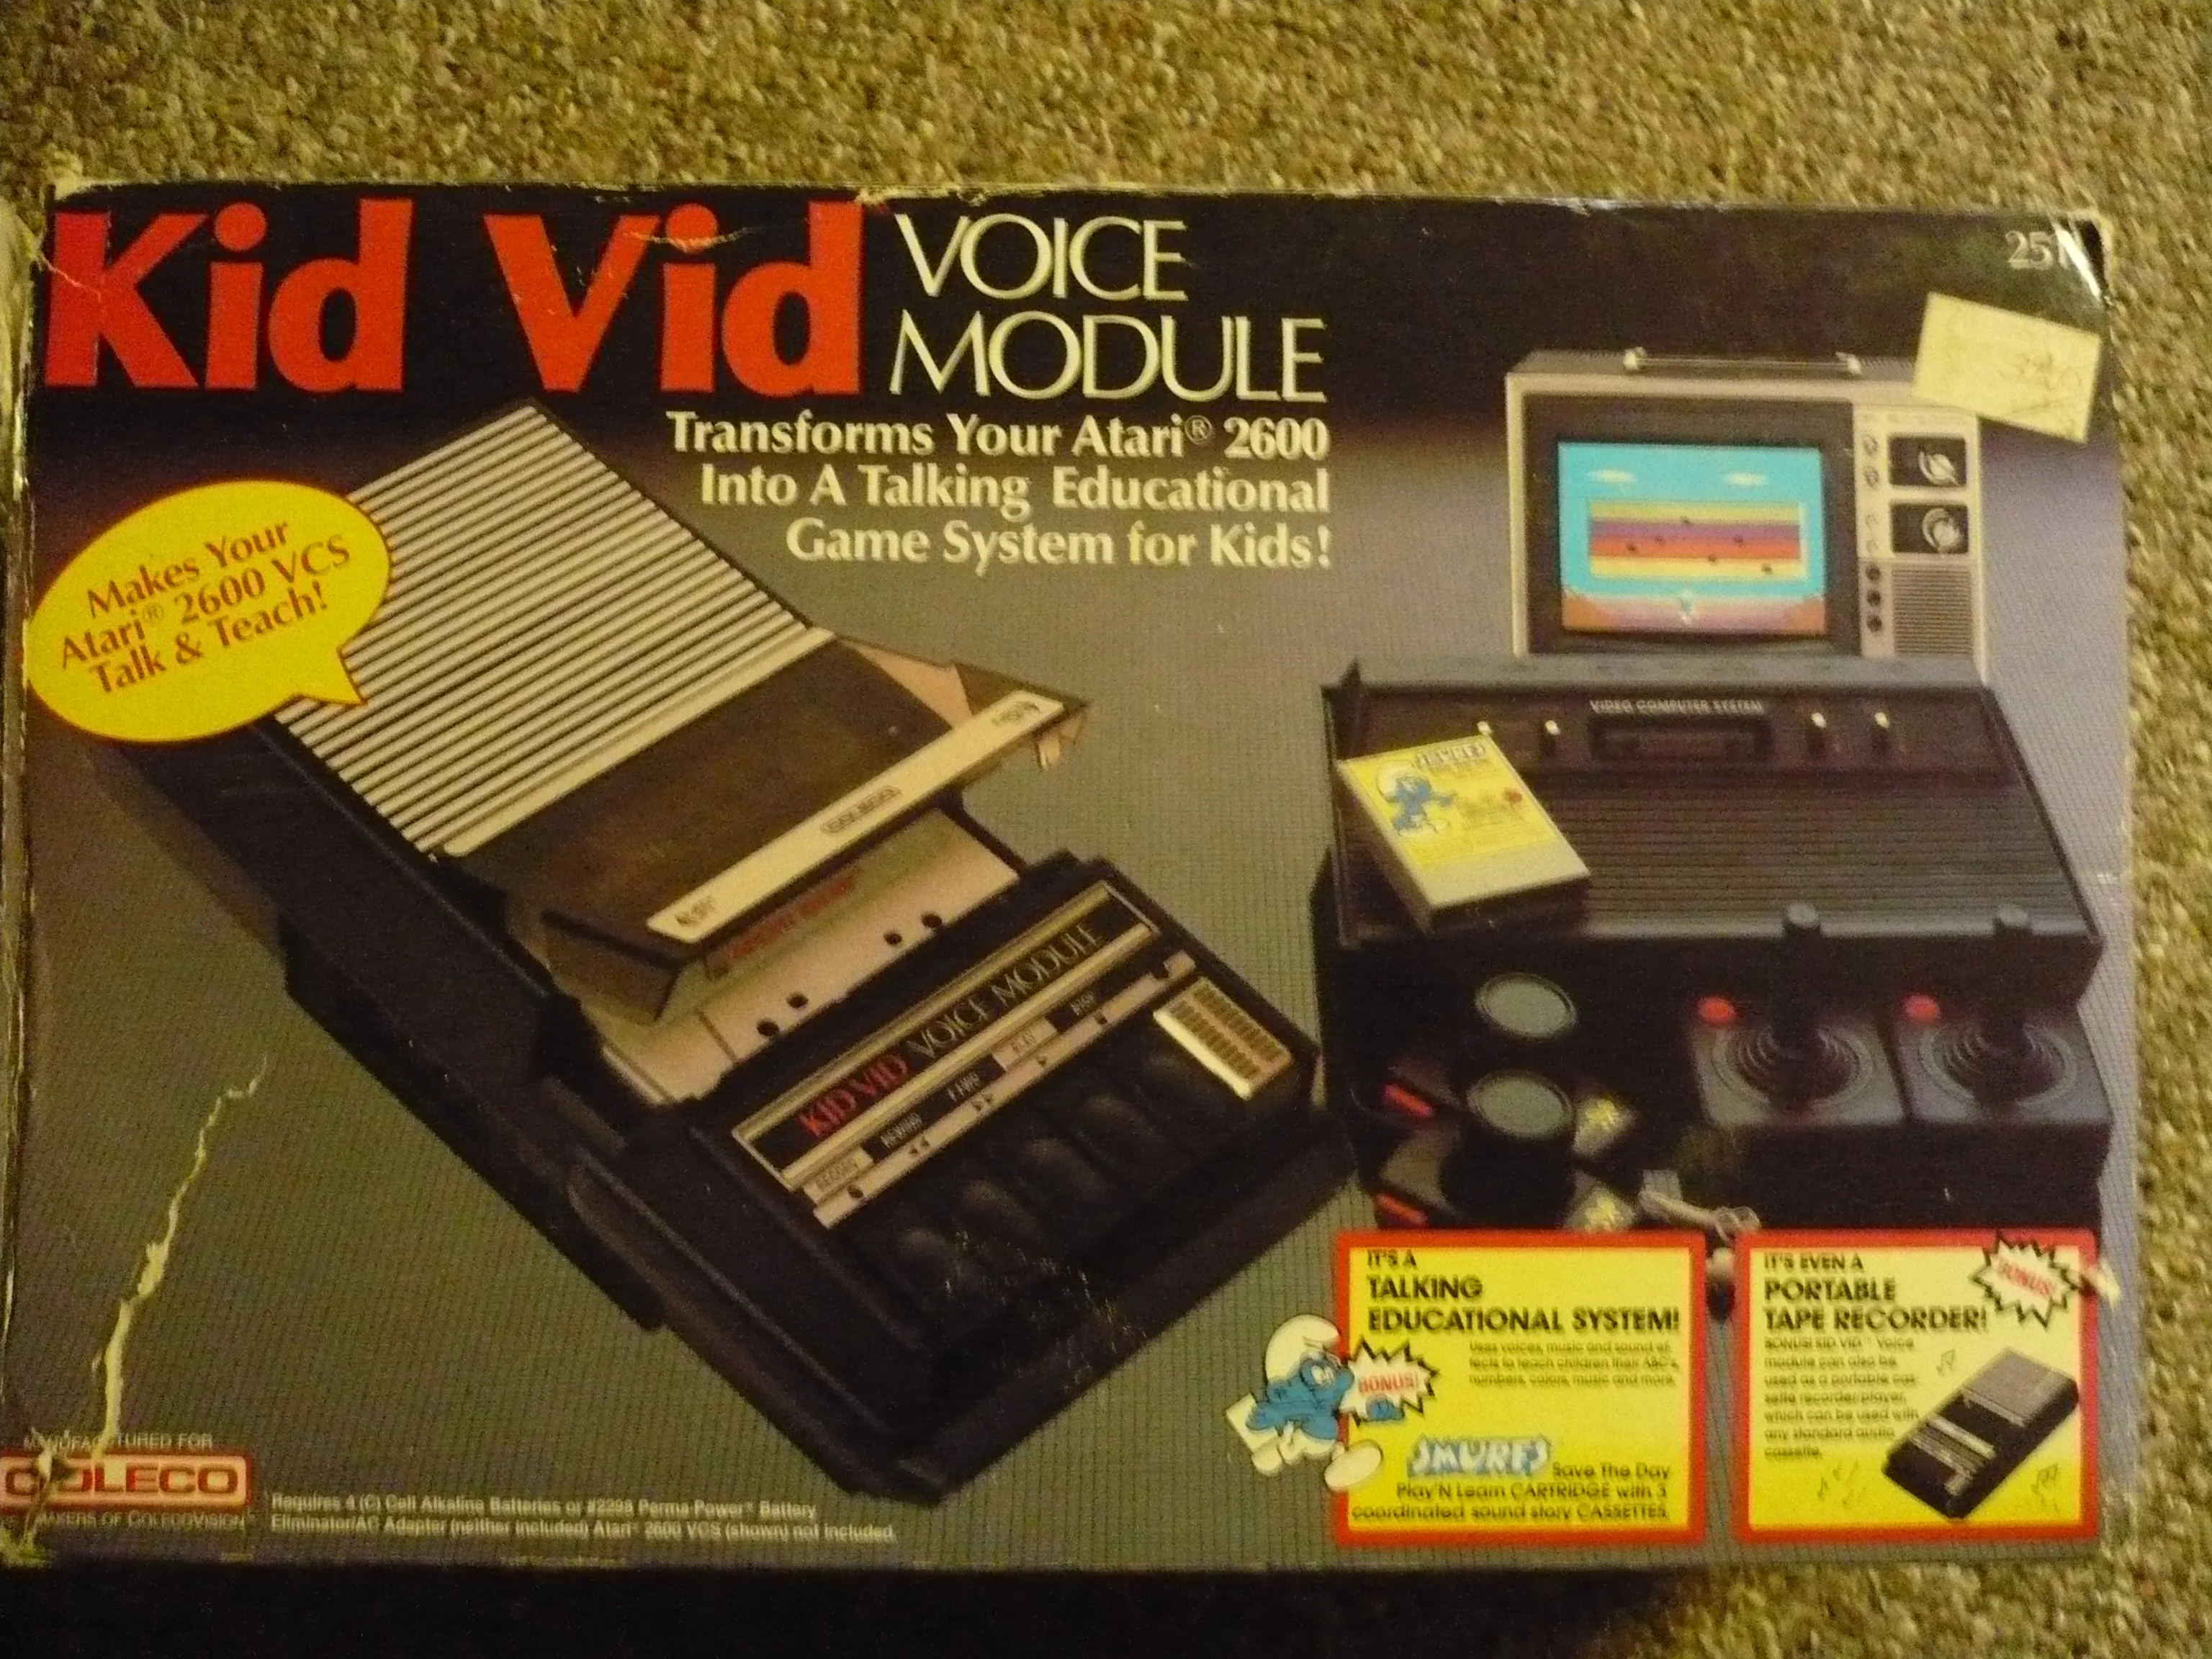  Coleco Atari 2600 Kid Vid Voice Module